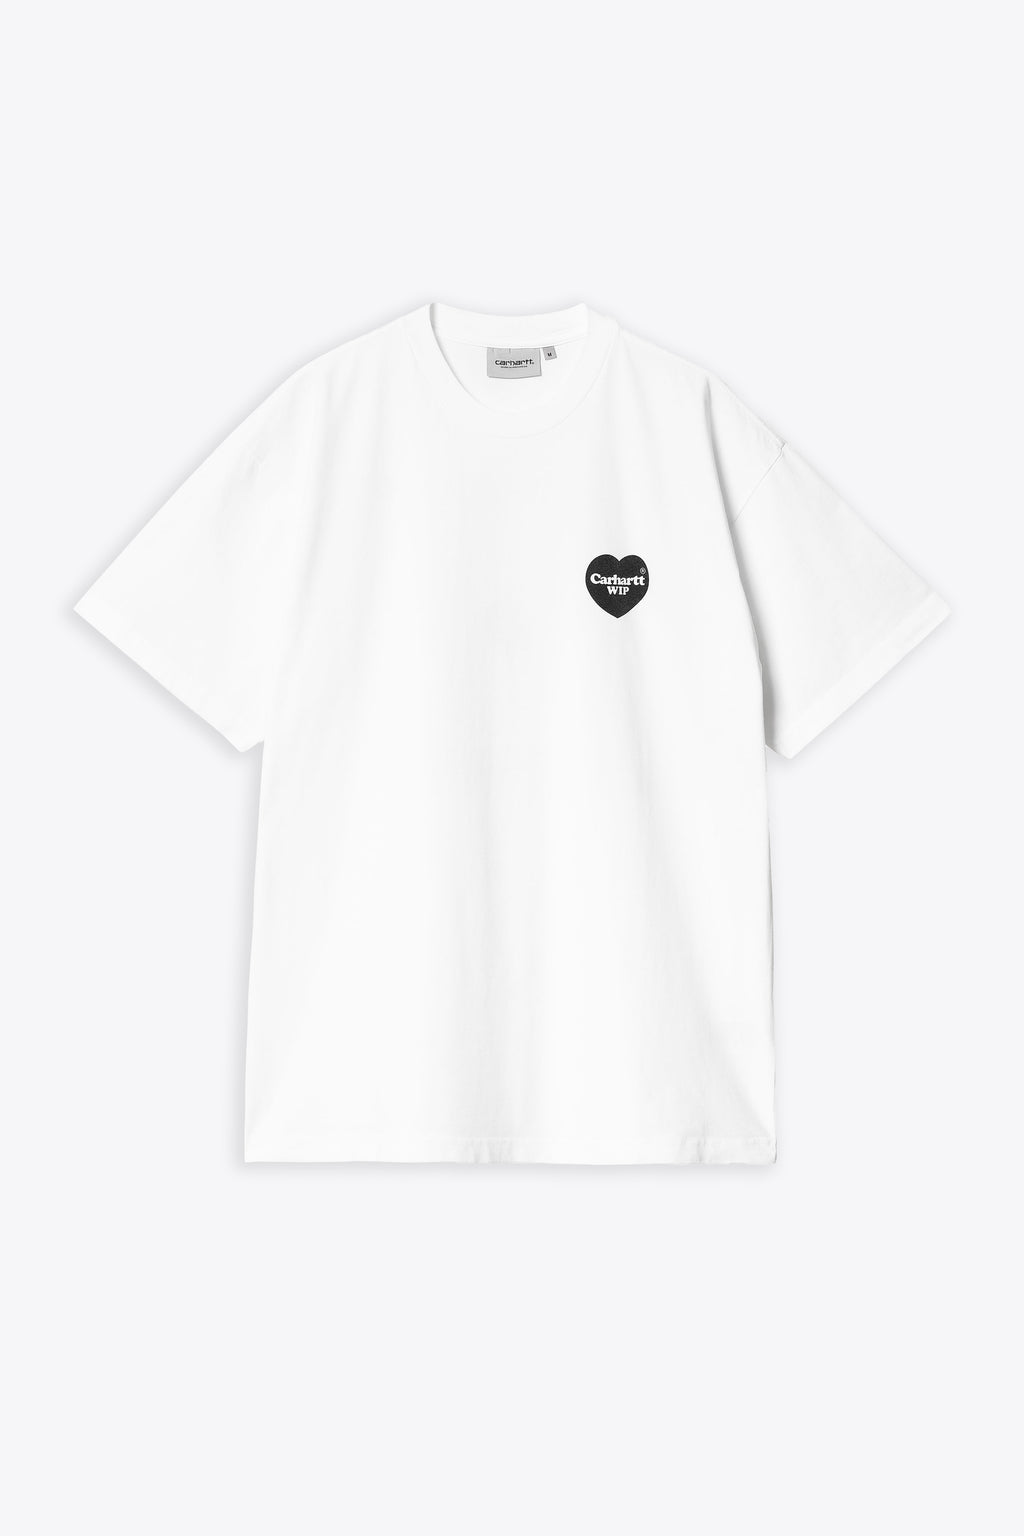 alt-image__White-cotton-t-shirt-with-heart-graphic-print---S/S-Heart-Bandana-T-Shirt